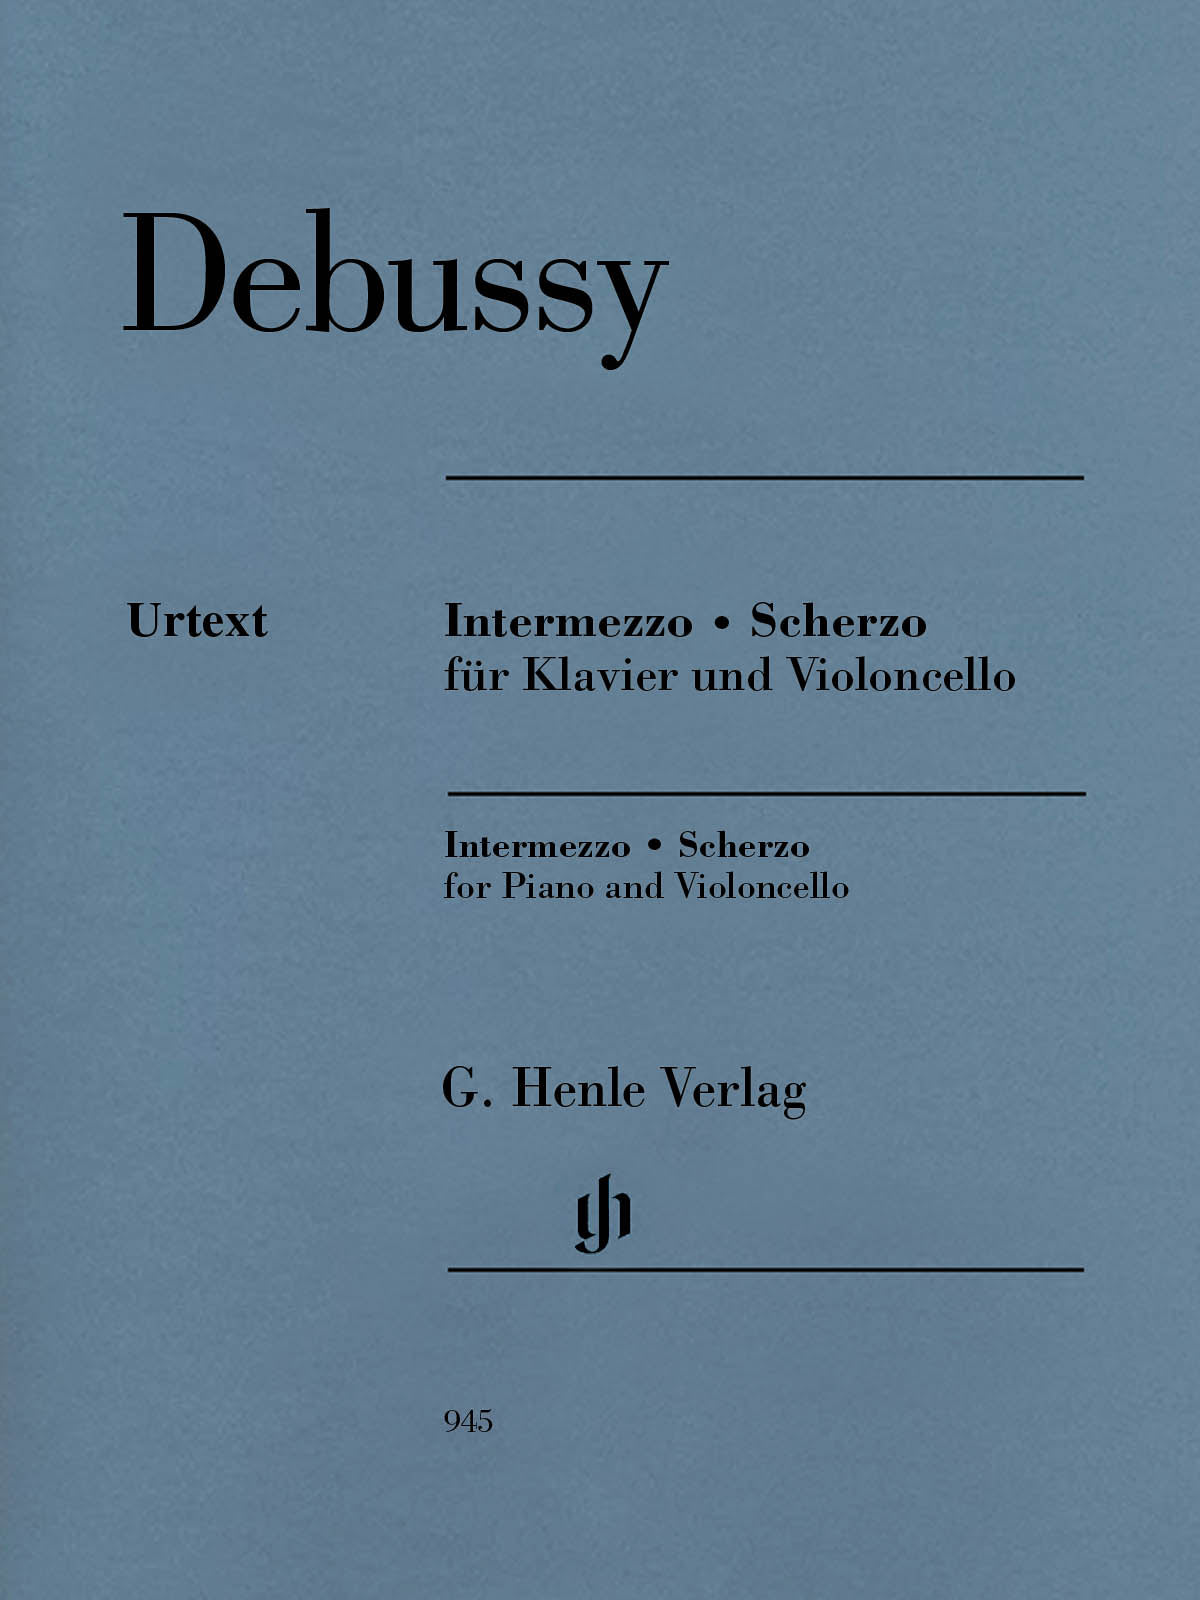 Debussy: Intermezzo & Scherzo